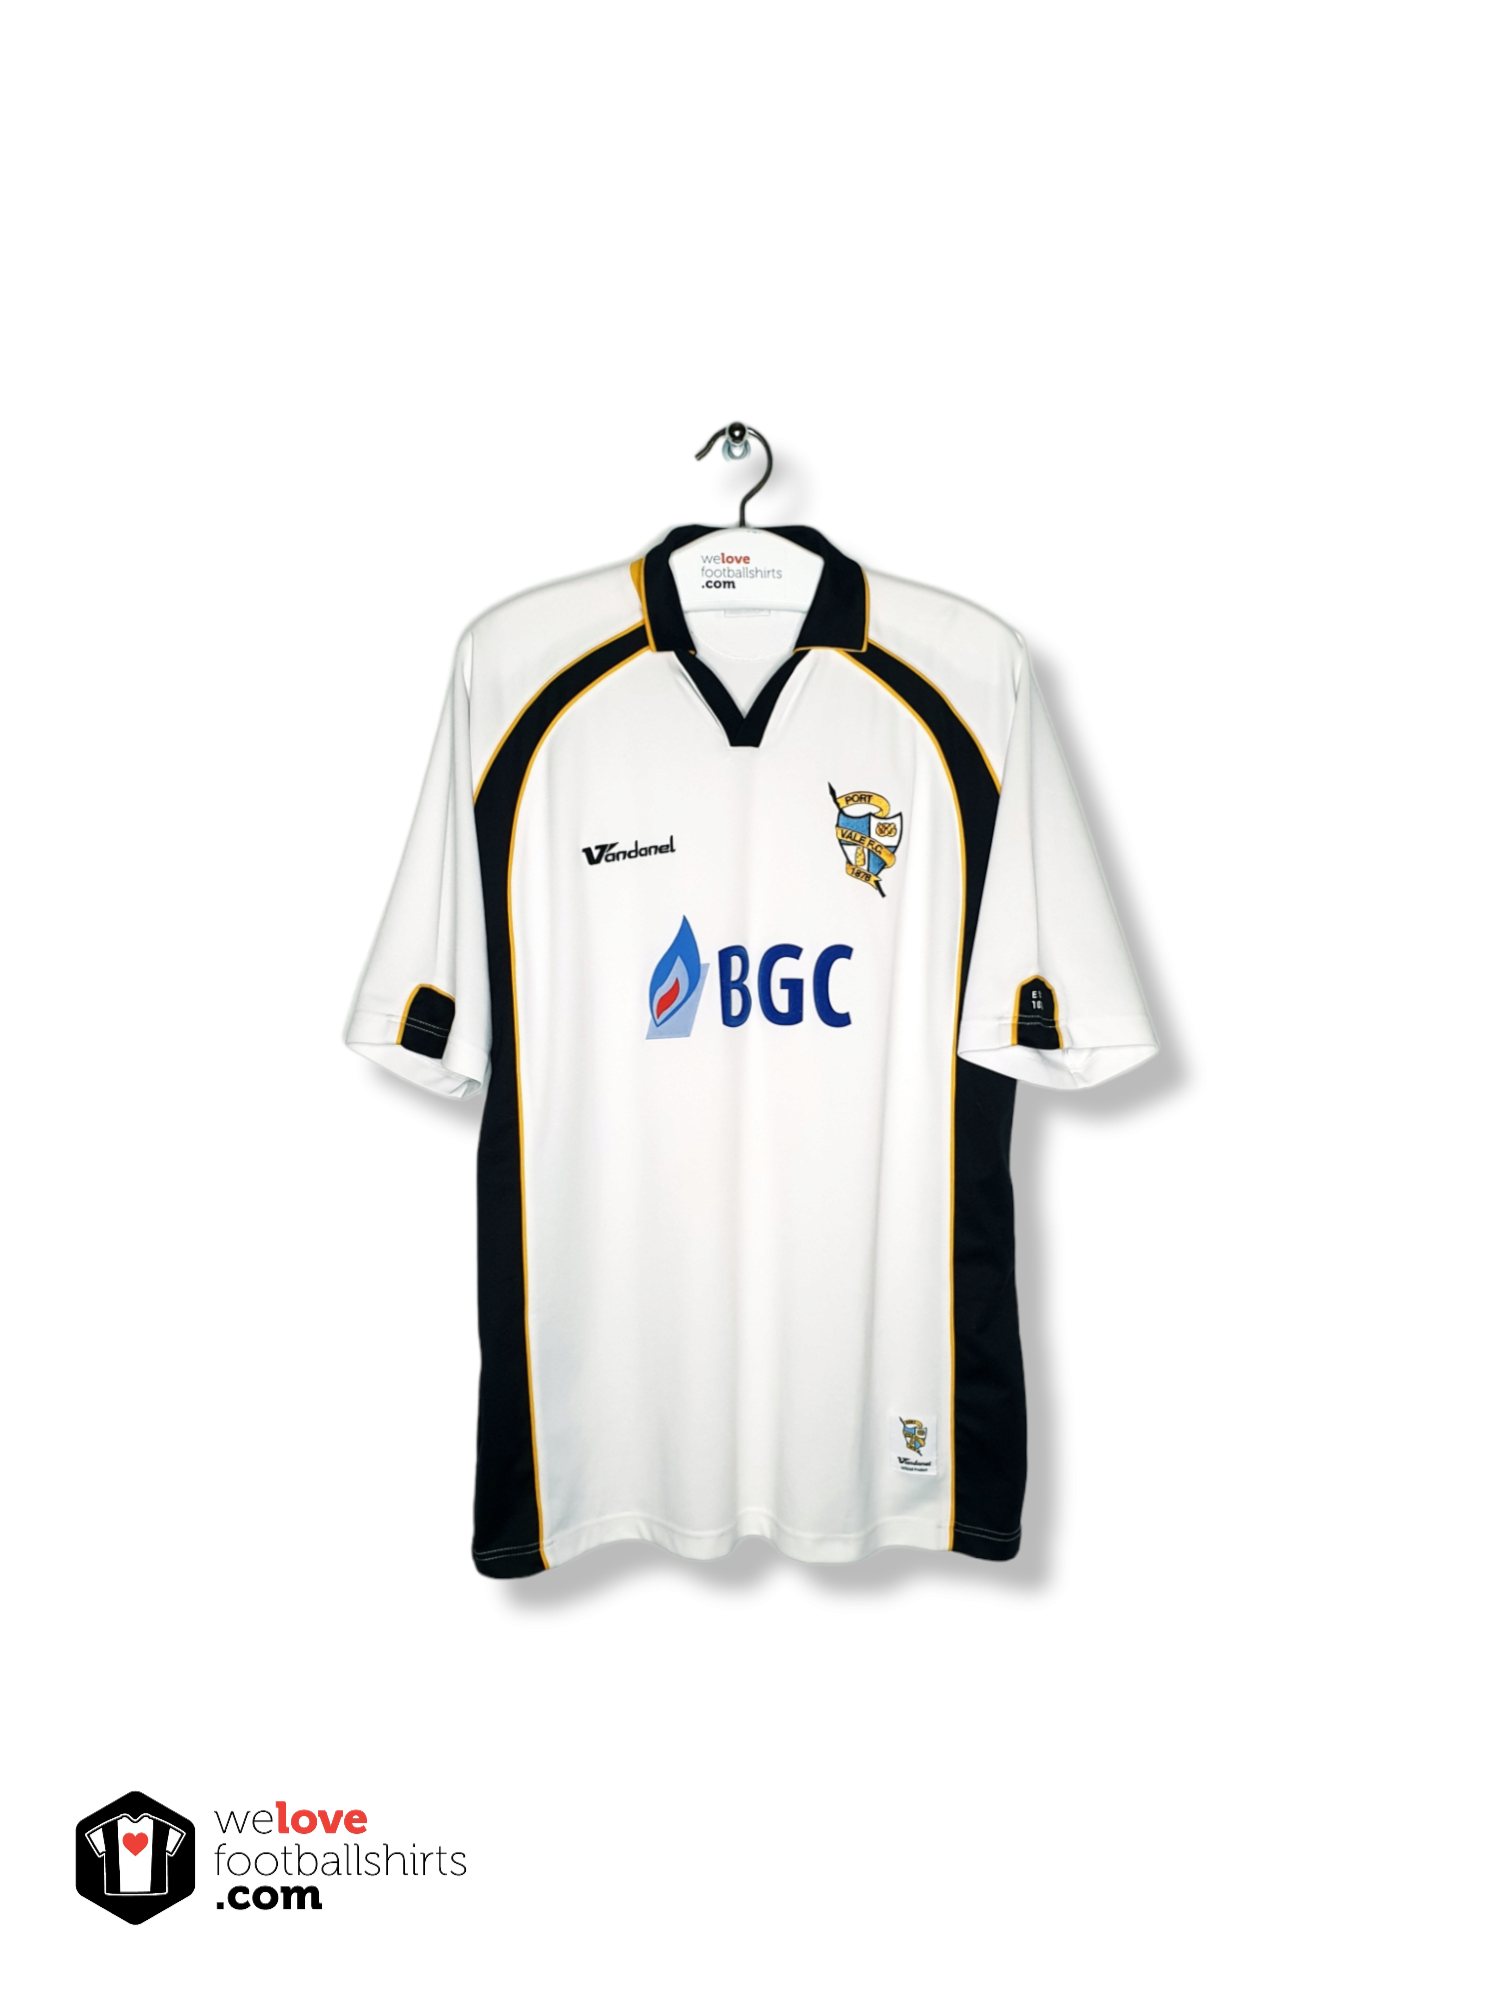 Vandanel football shirt Port Vale FC 2005/06 - Welovefootballshirts.com